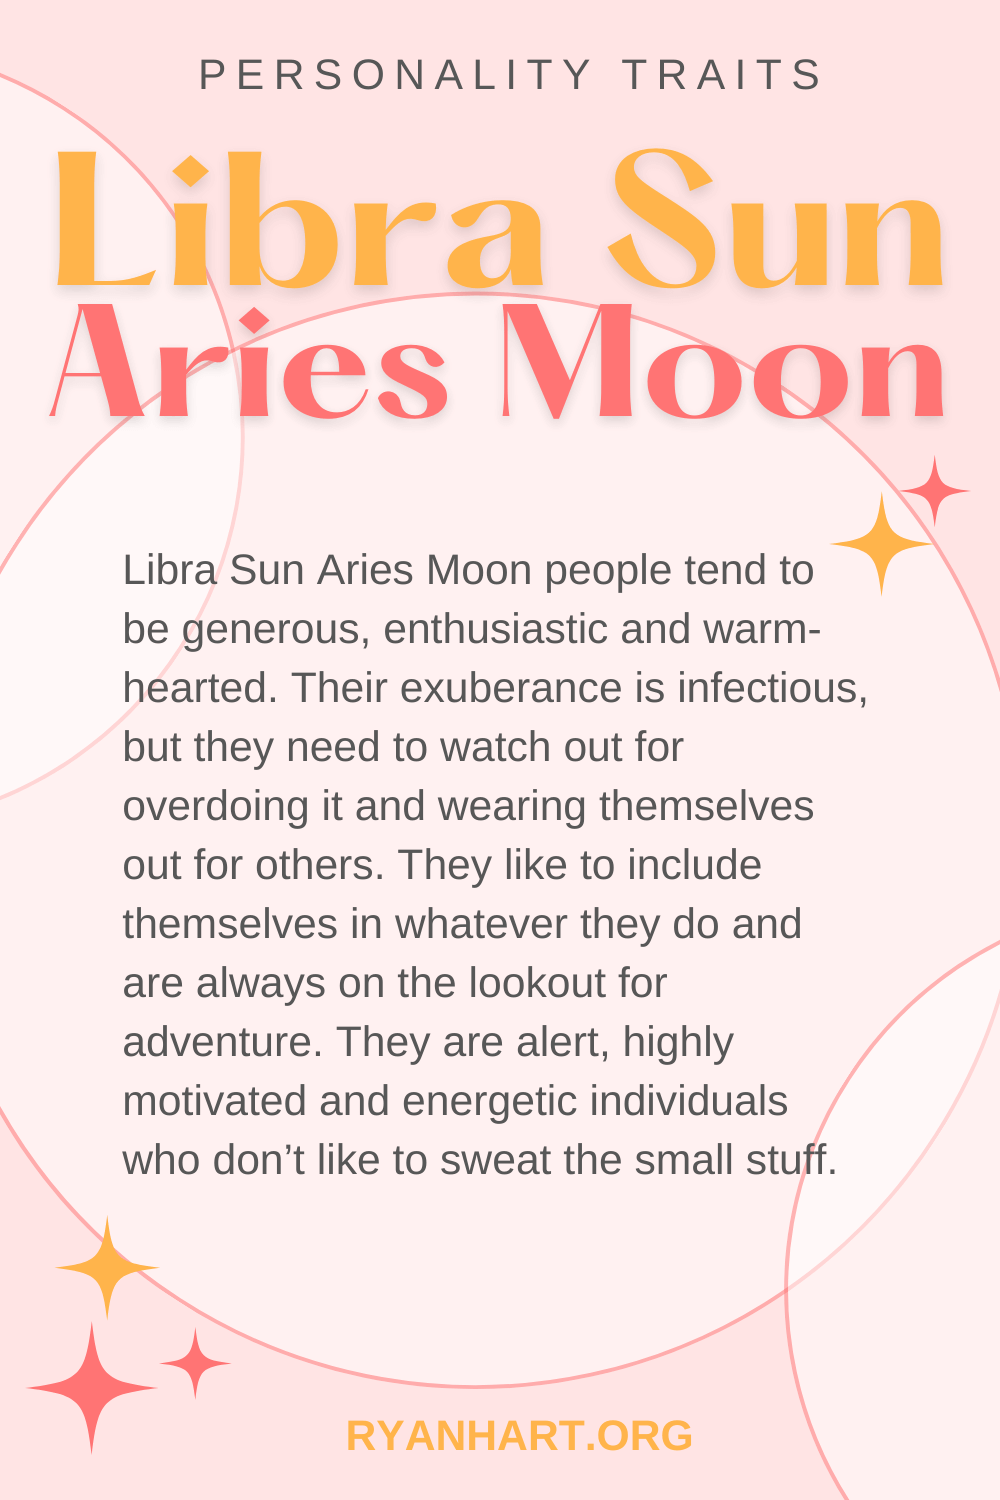  Libra Sol Aries Lúa Trazos de personalidade